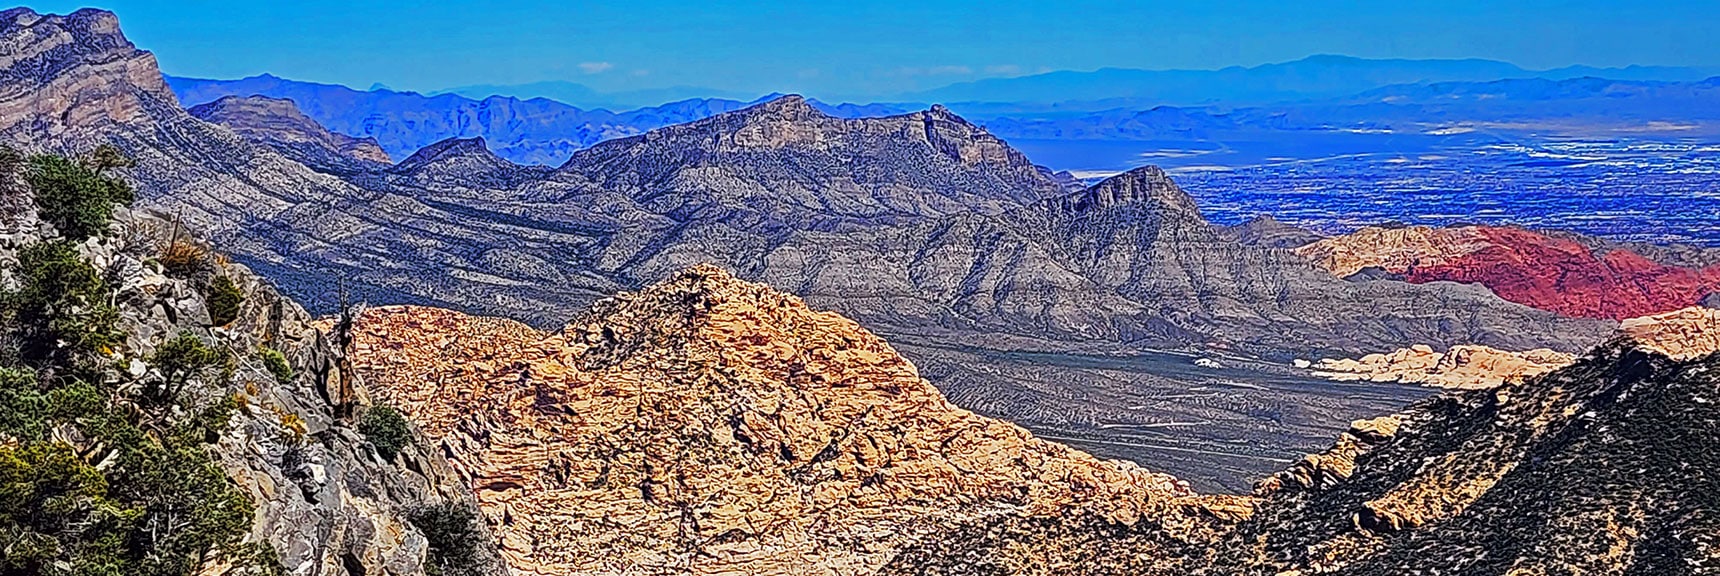 Damsel Peak, Turtlehead Peak & Calico Hills Viewed from Pinnacle. | Mini Matterhorn Pinnacle | Wilson Ridge | Lovell Canyon, Nevada